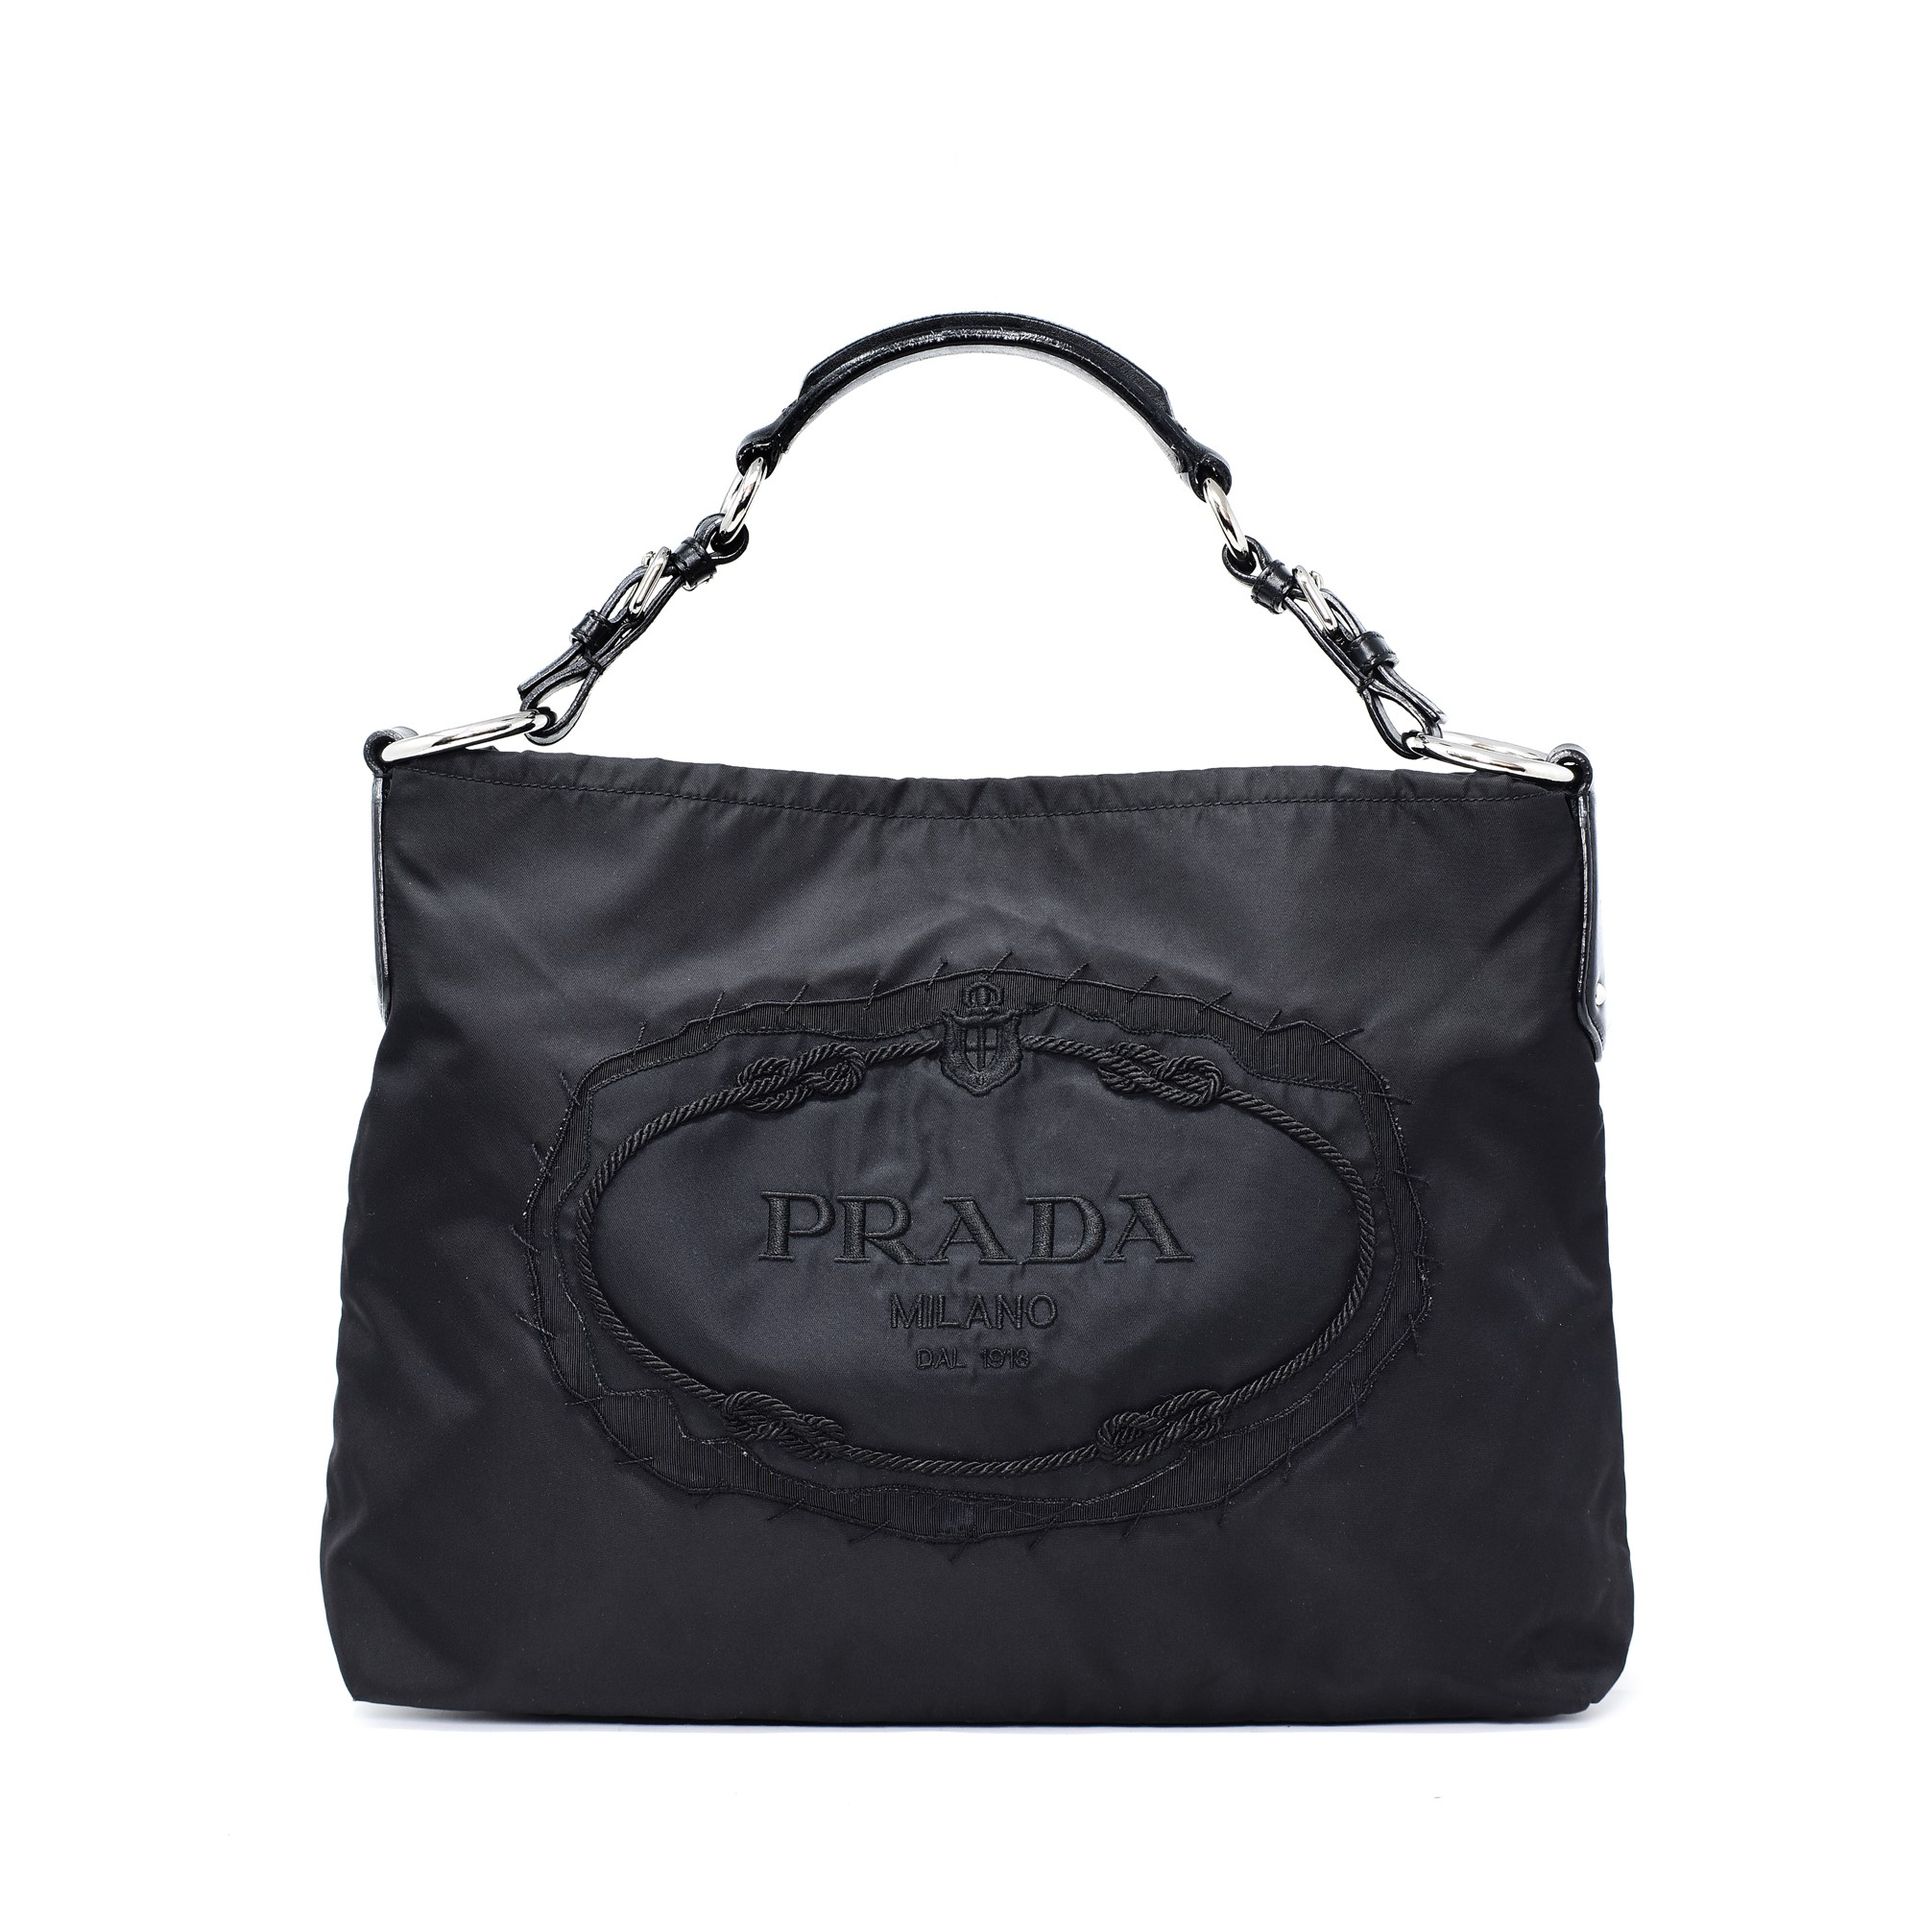 PRADA Prada shopping bag in nylon and pelle with an internal strap. With origina&hellip;